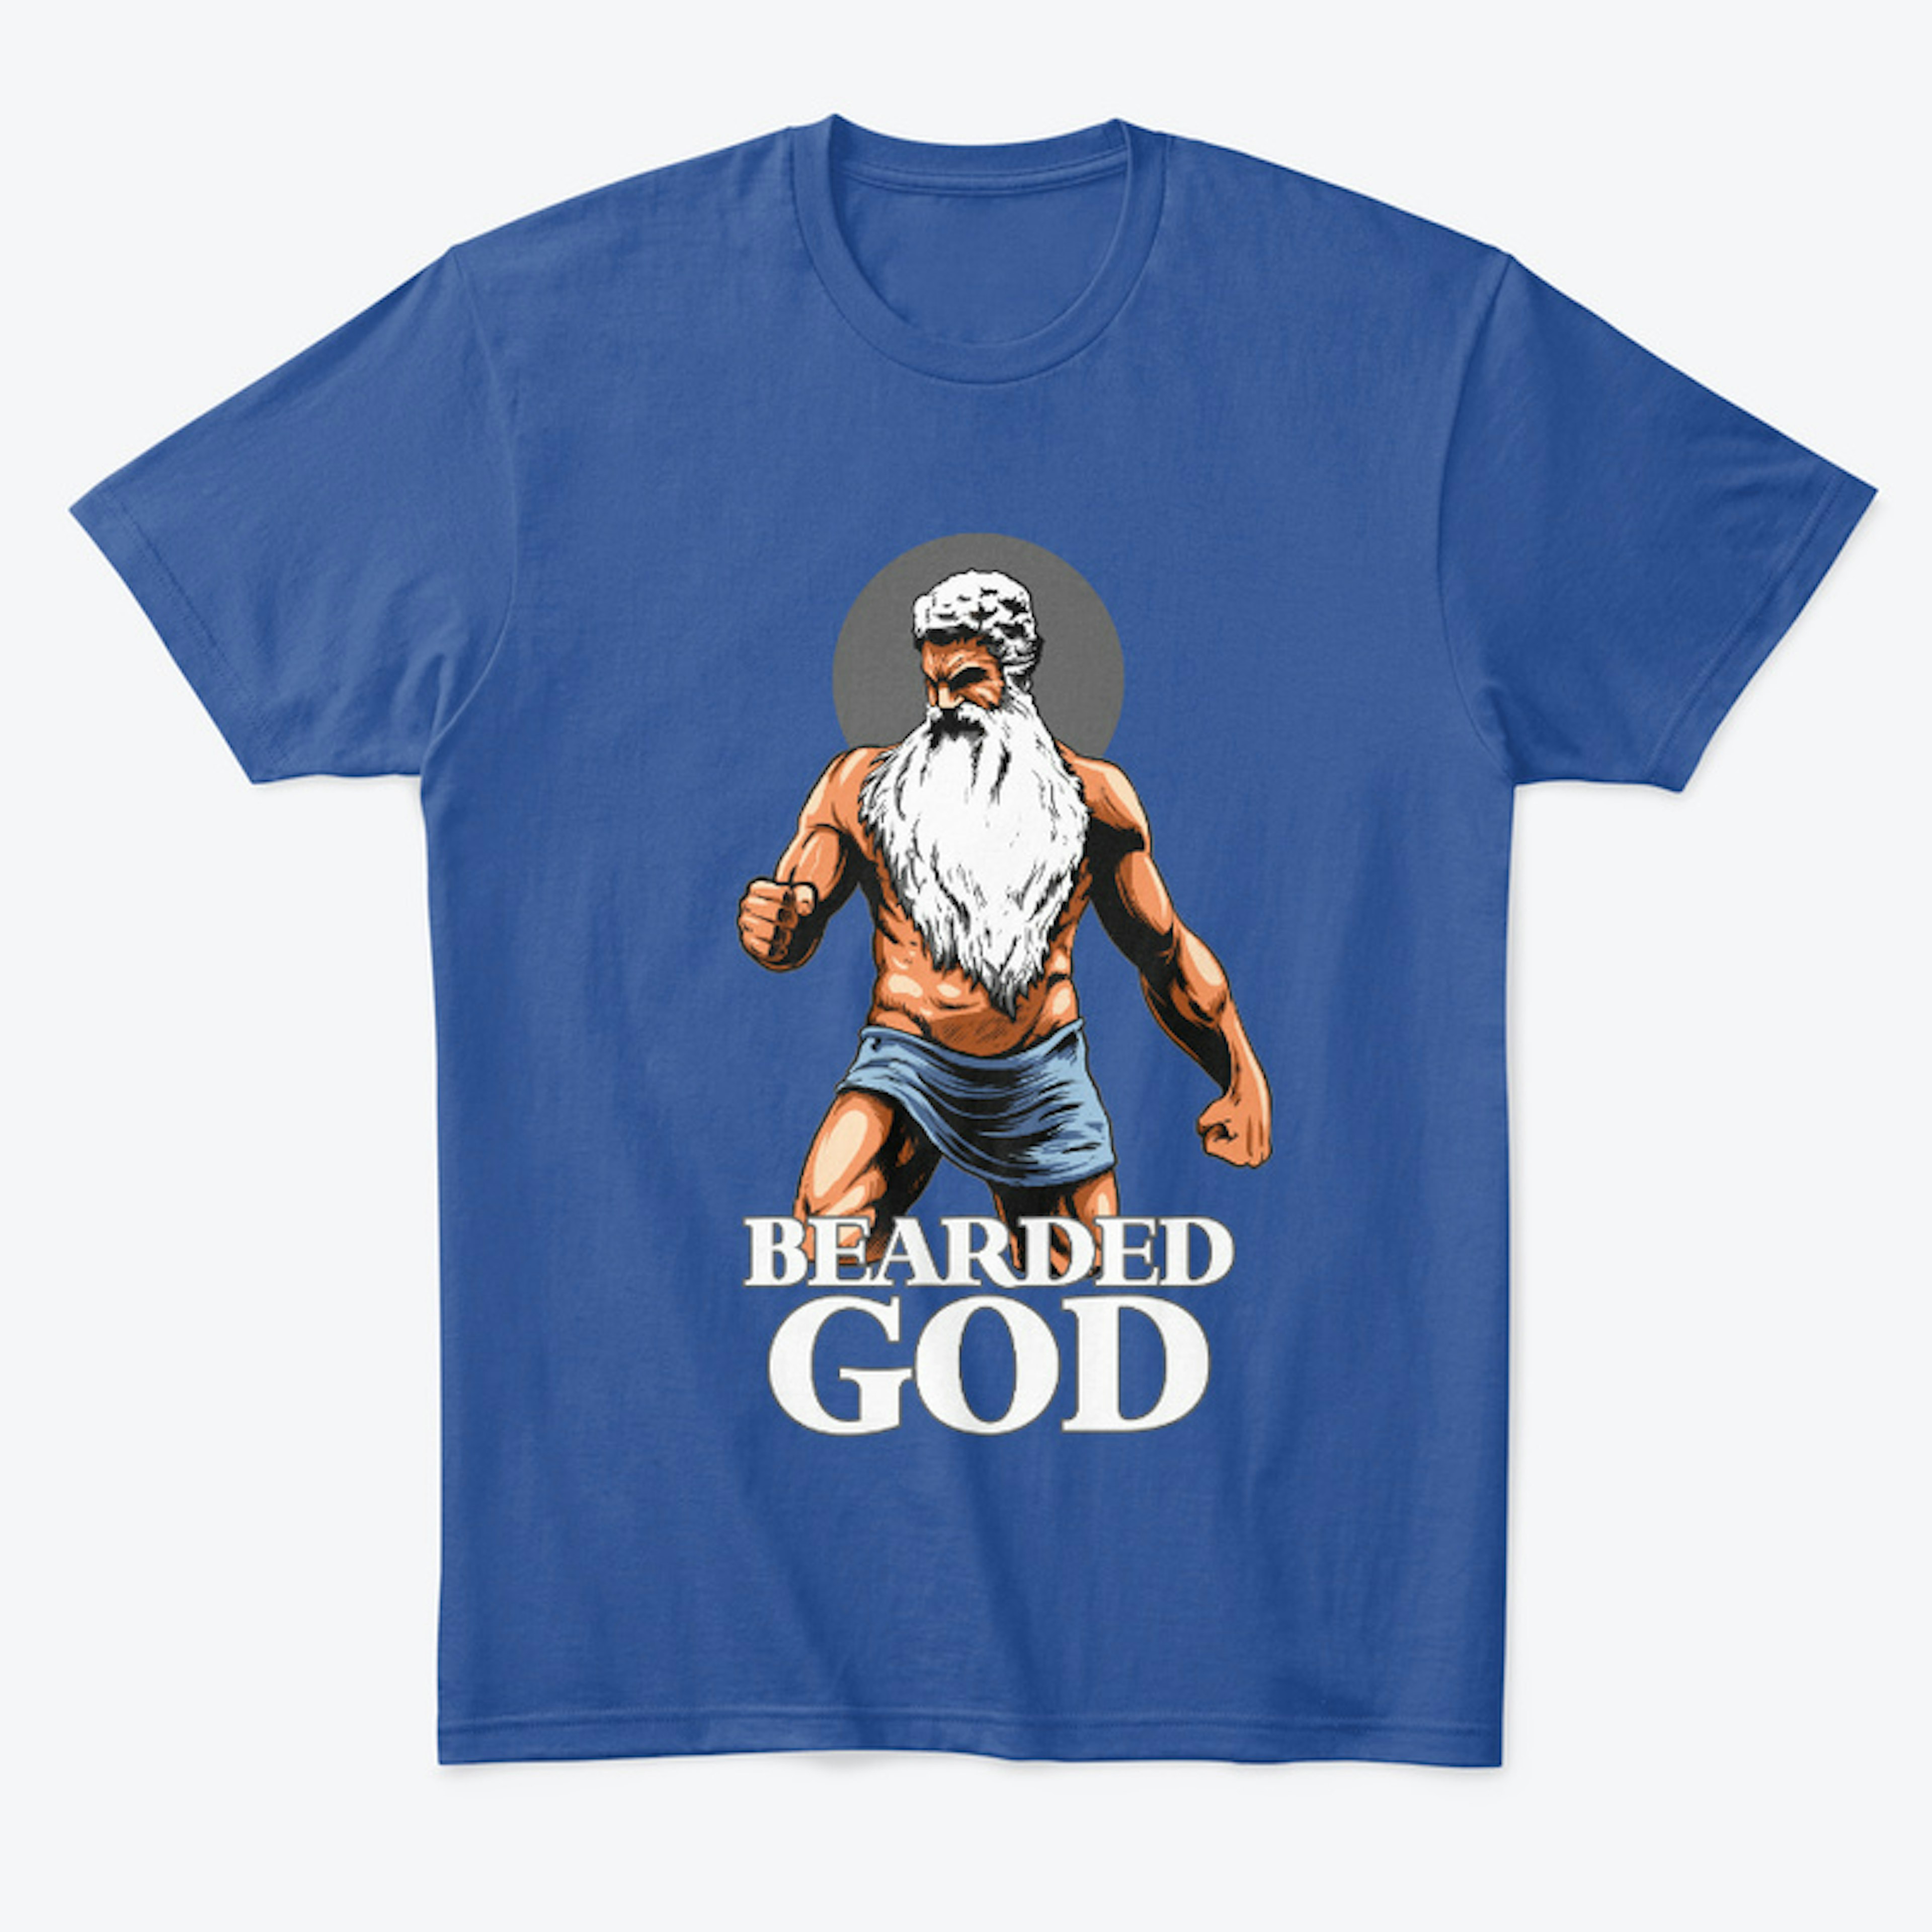 Bearded God - Premium Tee